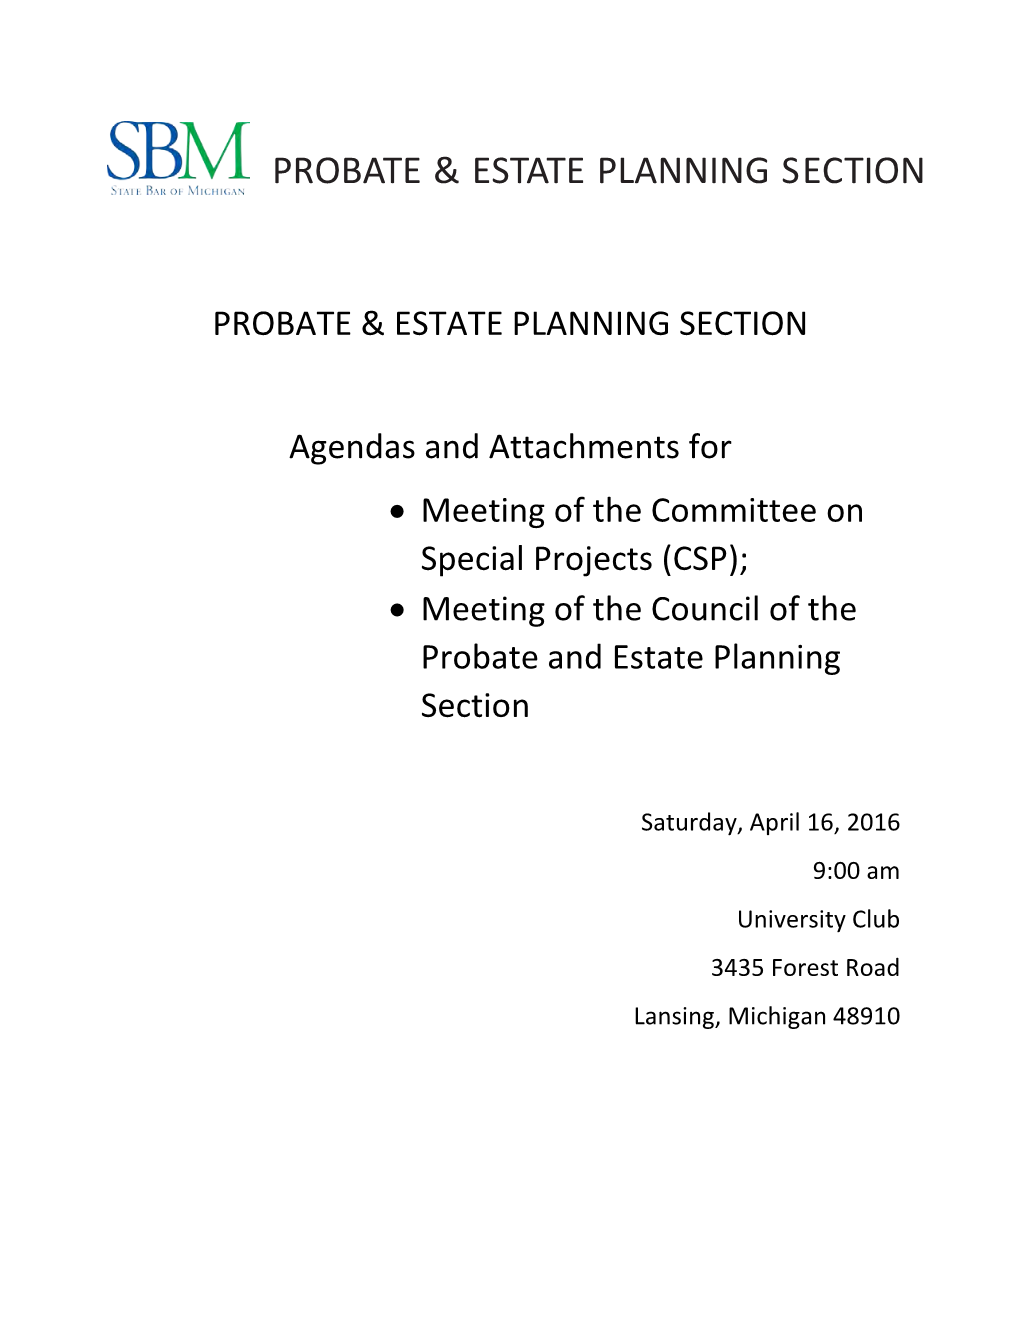 Probate & Estate Planning Section